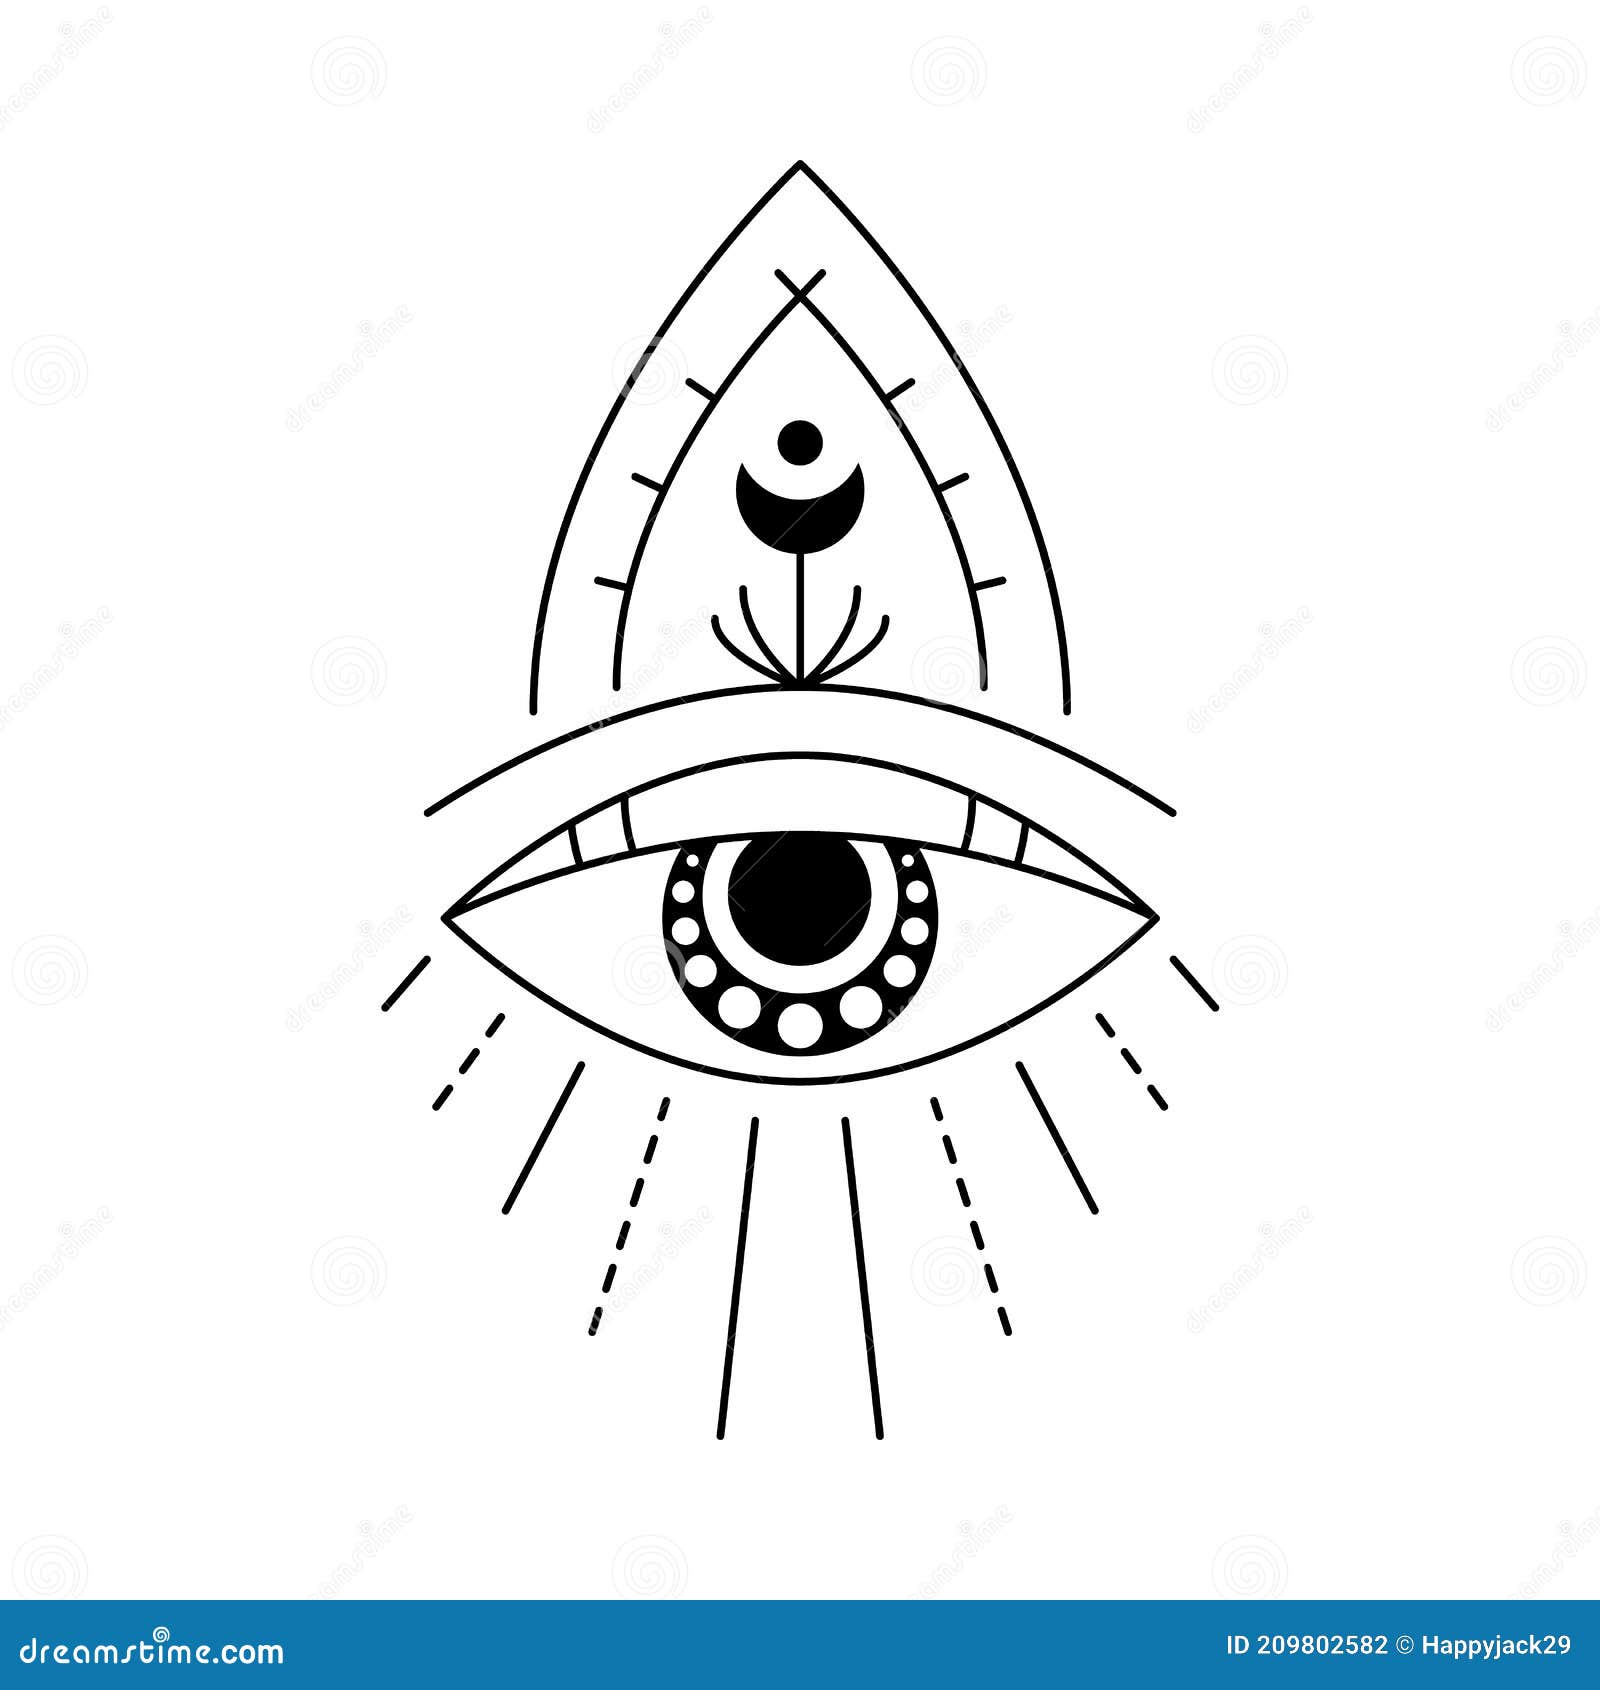 Top 30 Meaningful Evil Eye Tattoo Design Ideas (2021 Updated) - Saved Tattoo  | Eye tattoo, Third eye tattoos, All seeing eye tattoo